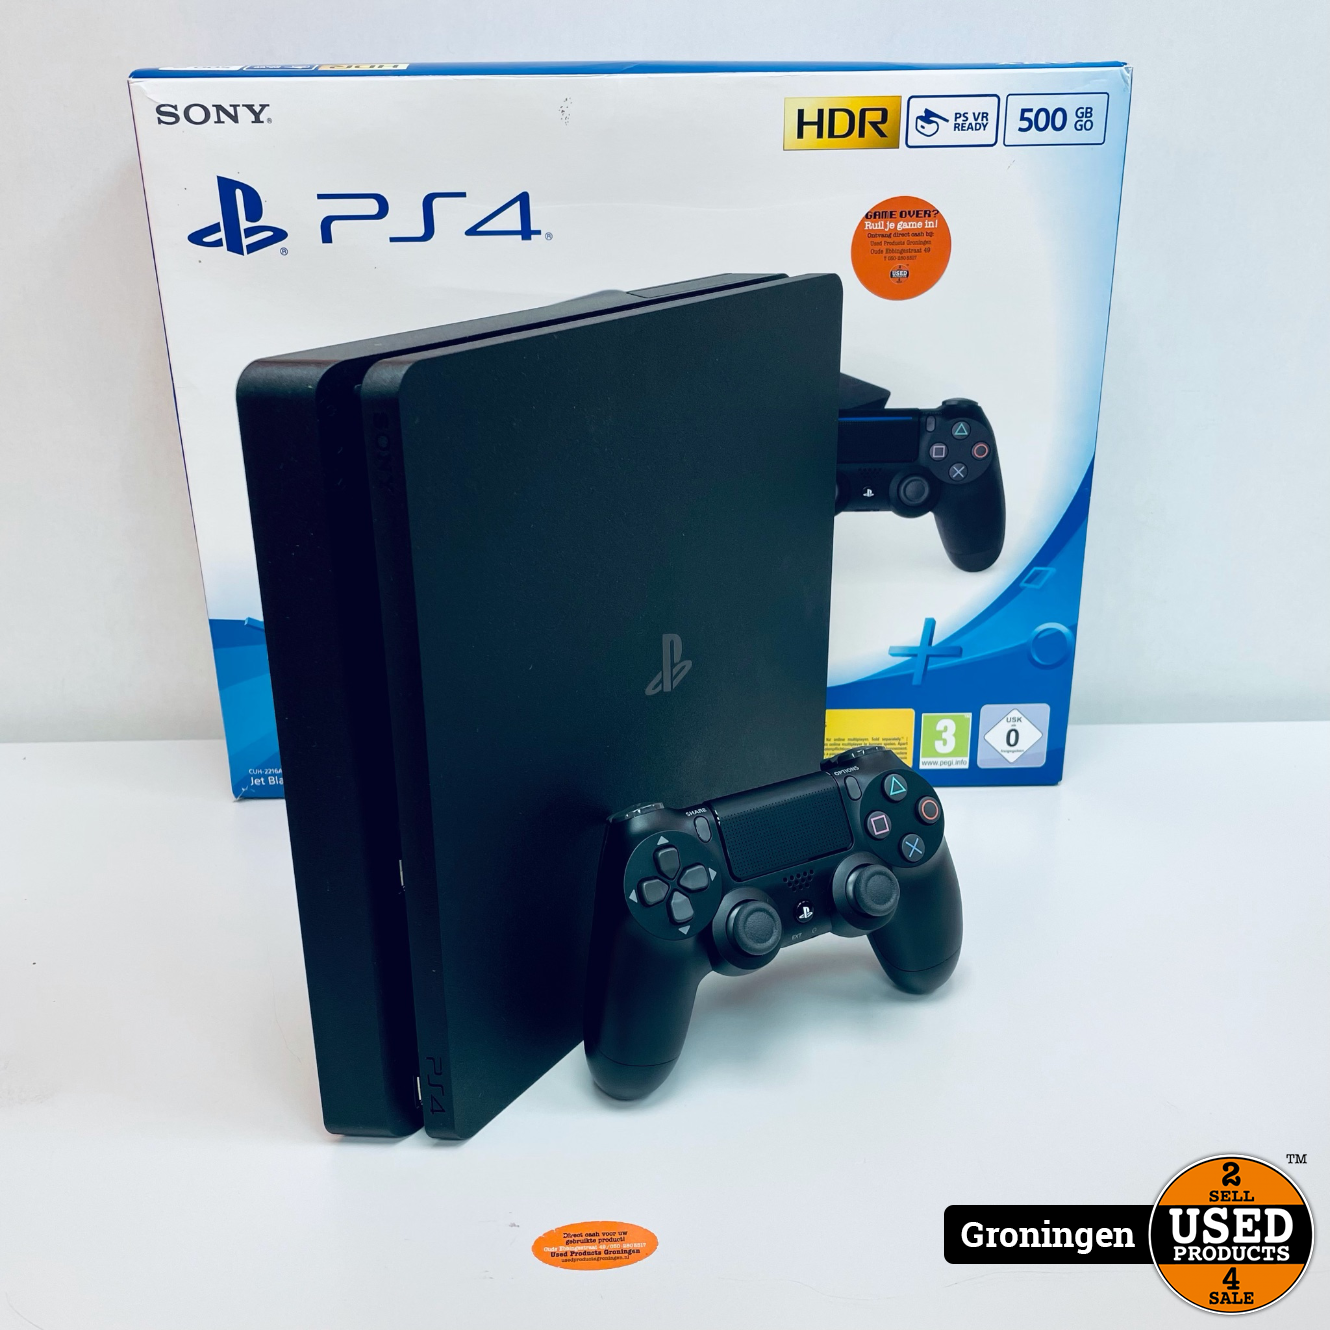 PS4] Sony PlayStation 4 500GB Zwart | incl. Controller, kabels en doos - Used Products Groningen